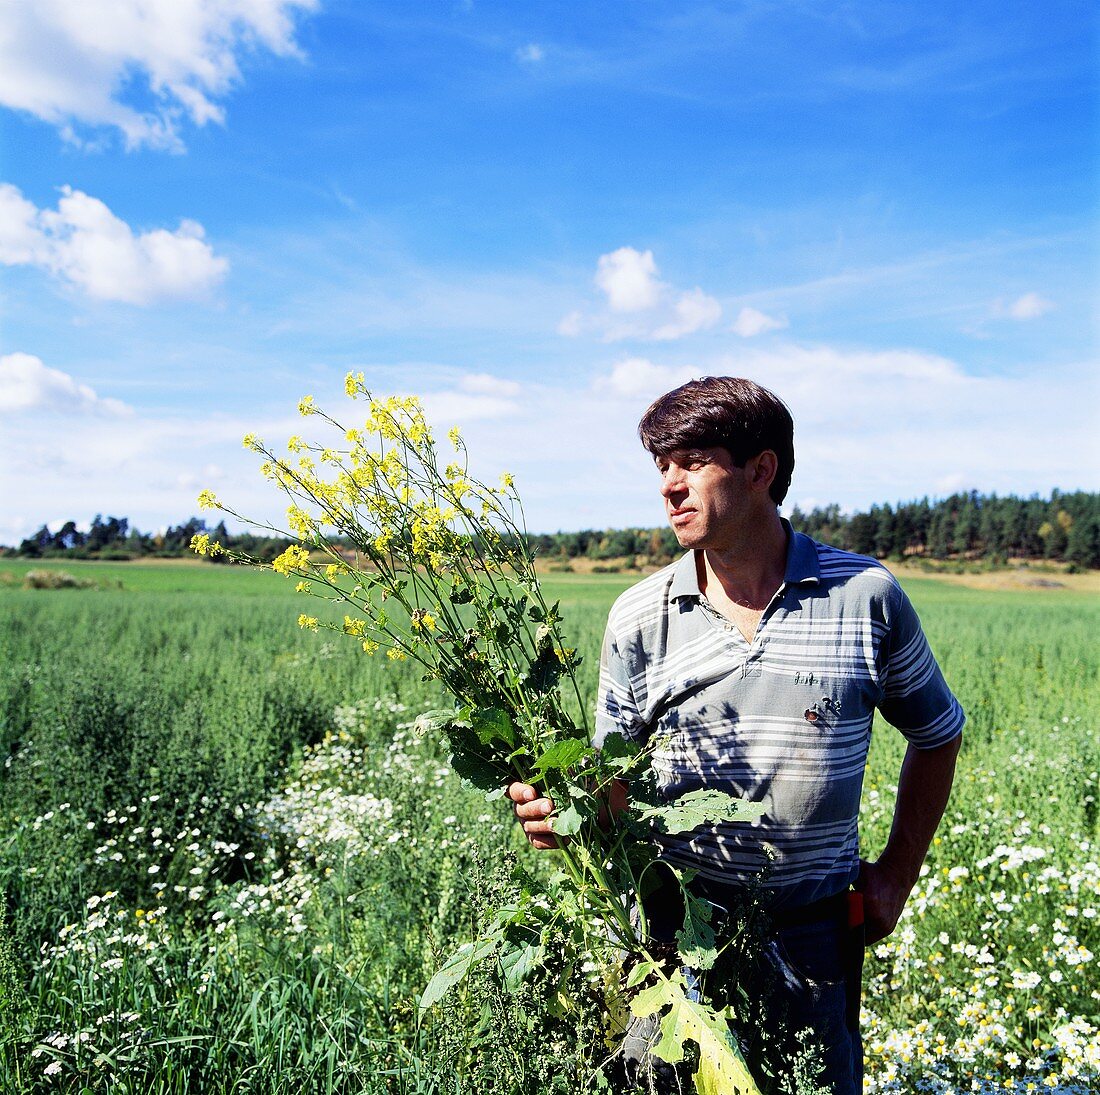 Man standing in field, holding an oilseed rape plant